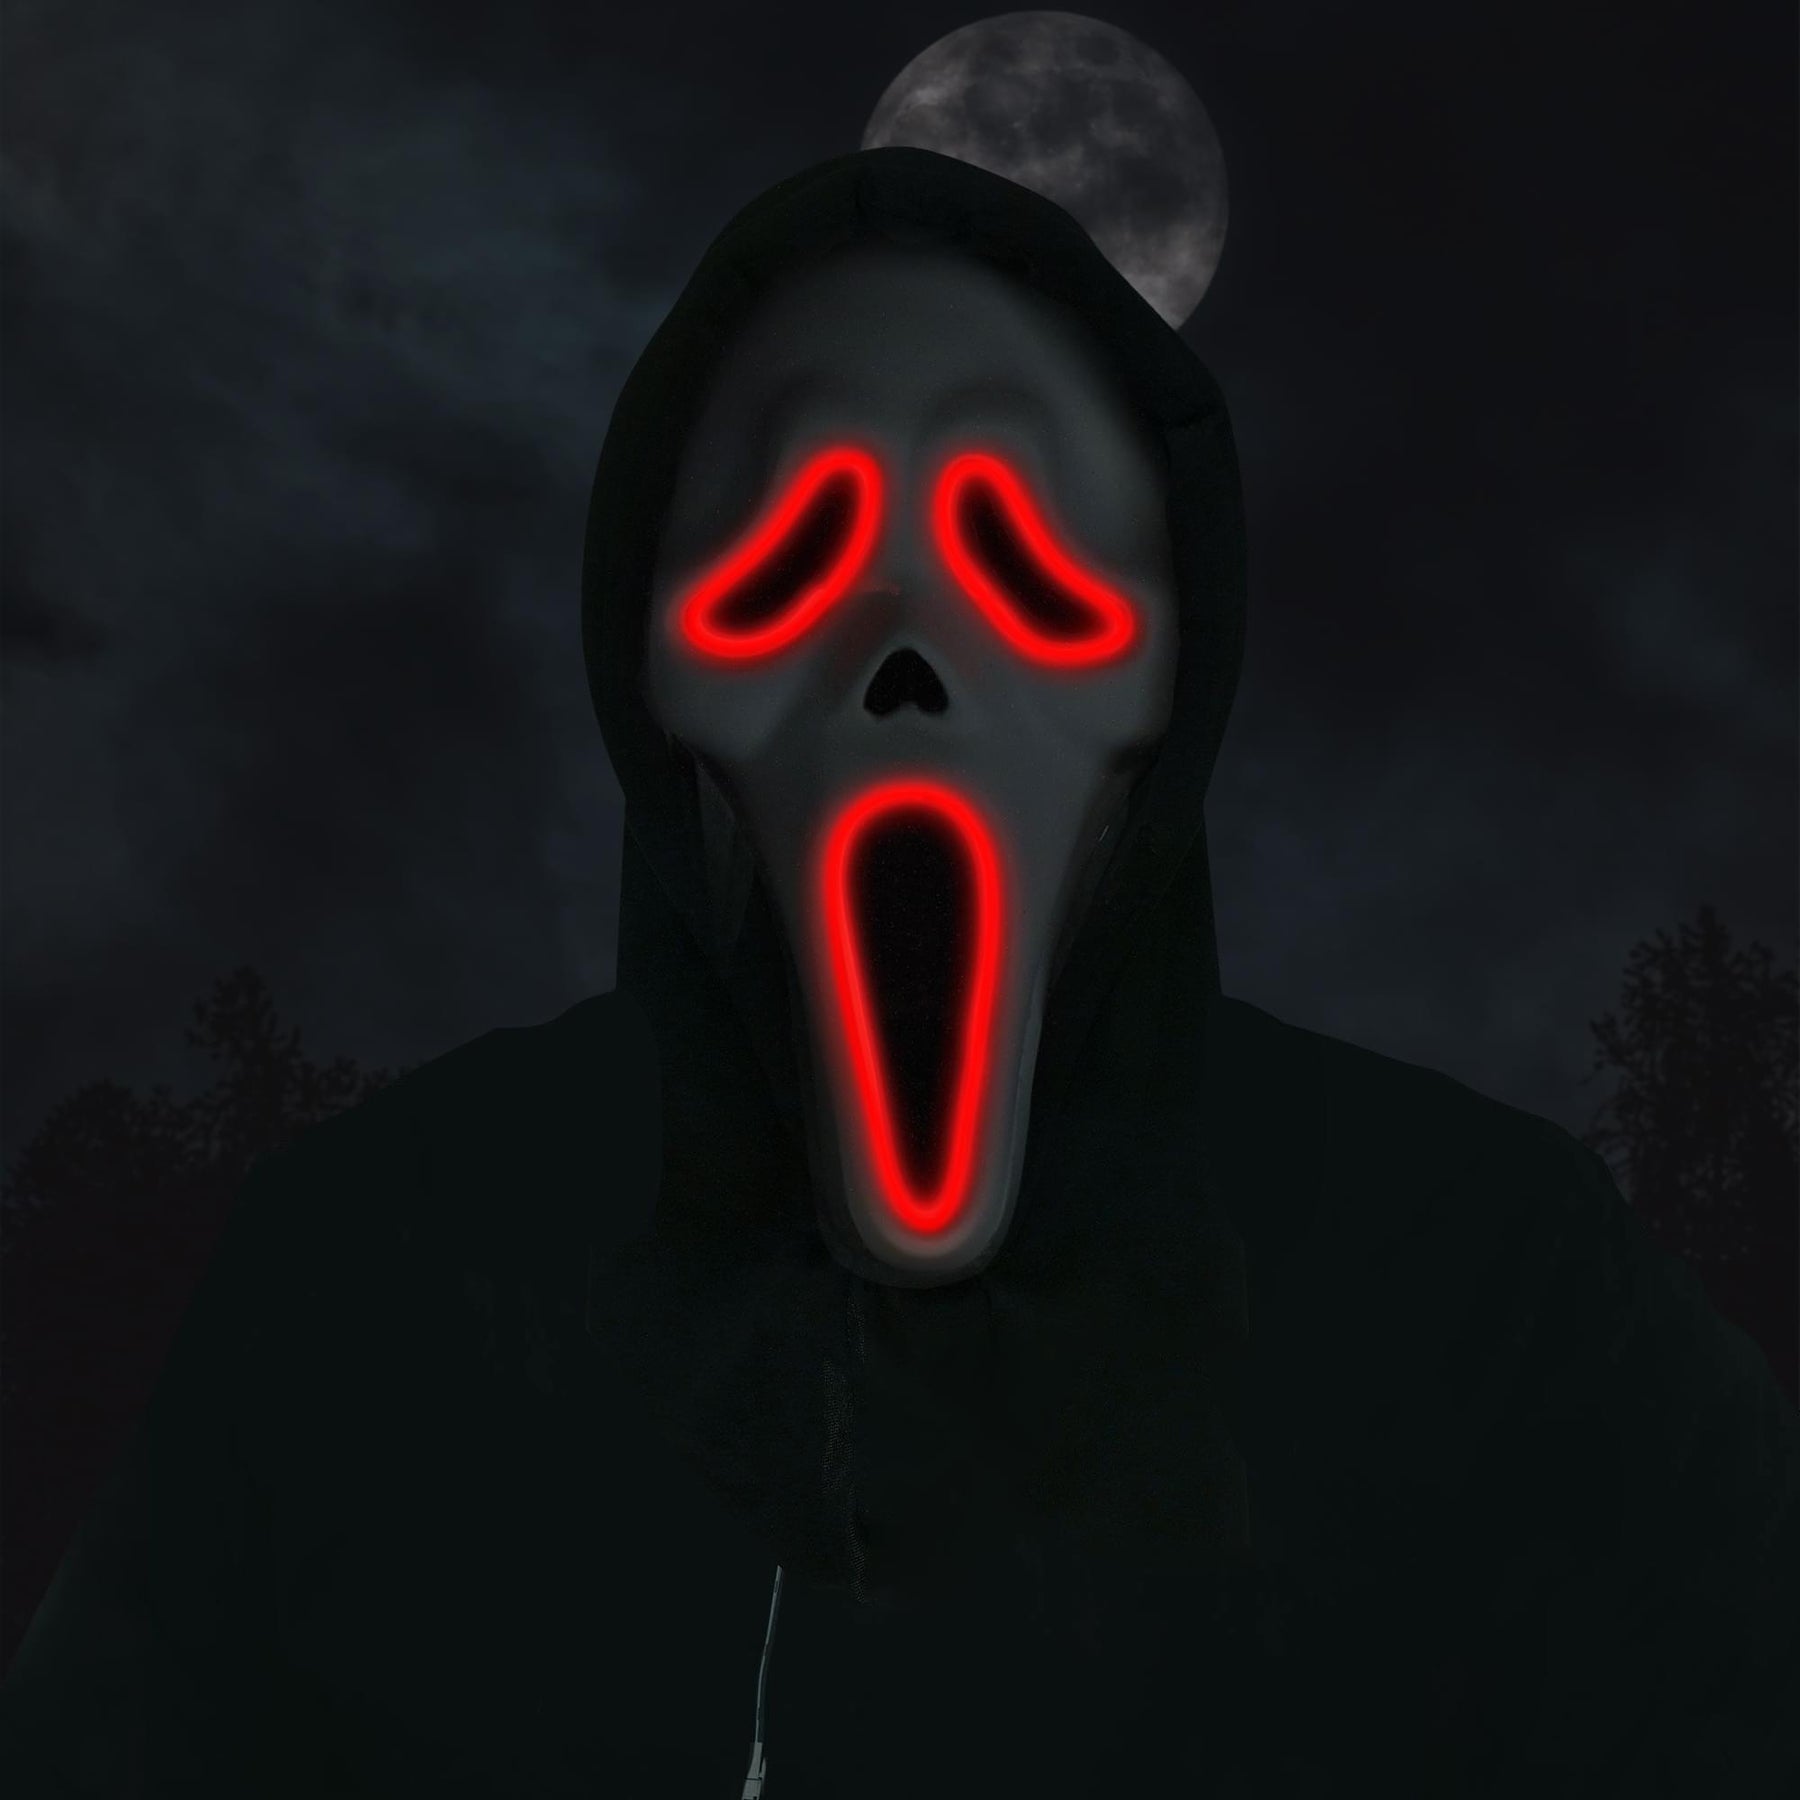 Ghost Face Illumo EL Light-Up Costume Mask